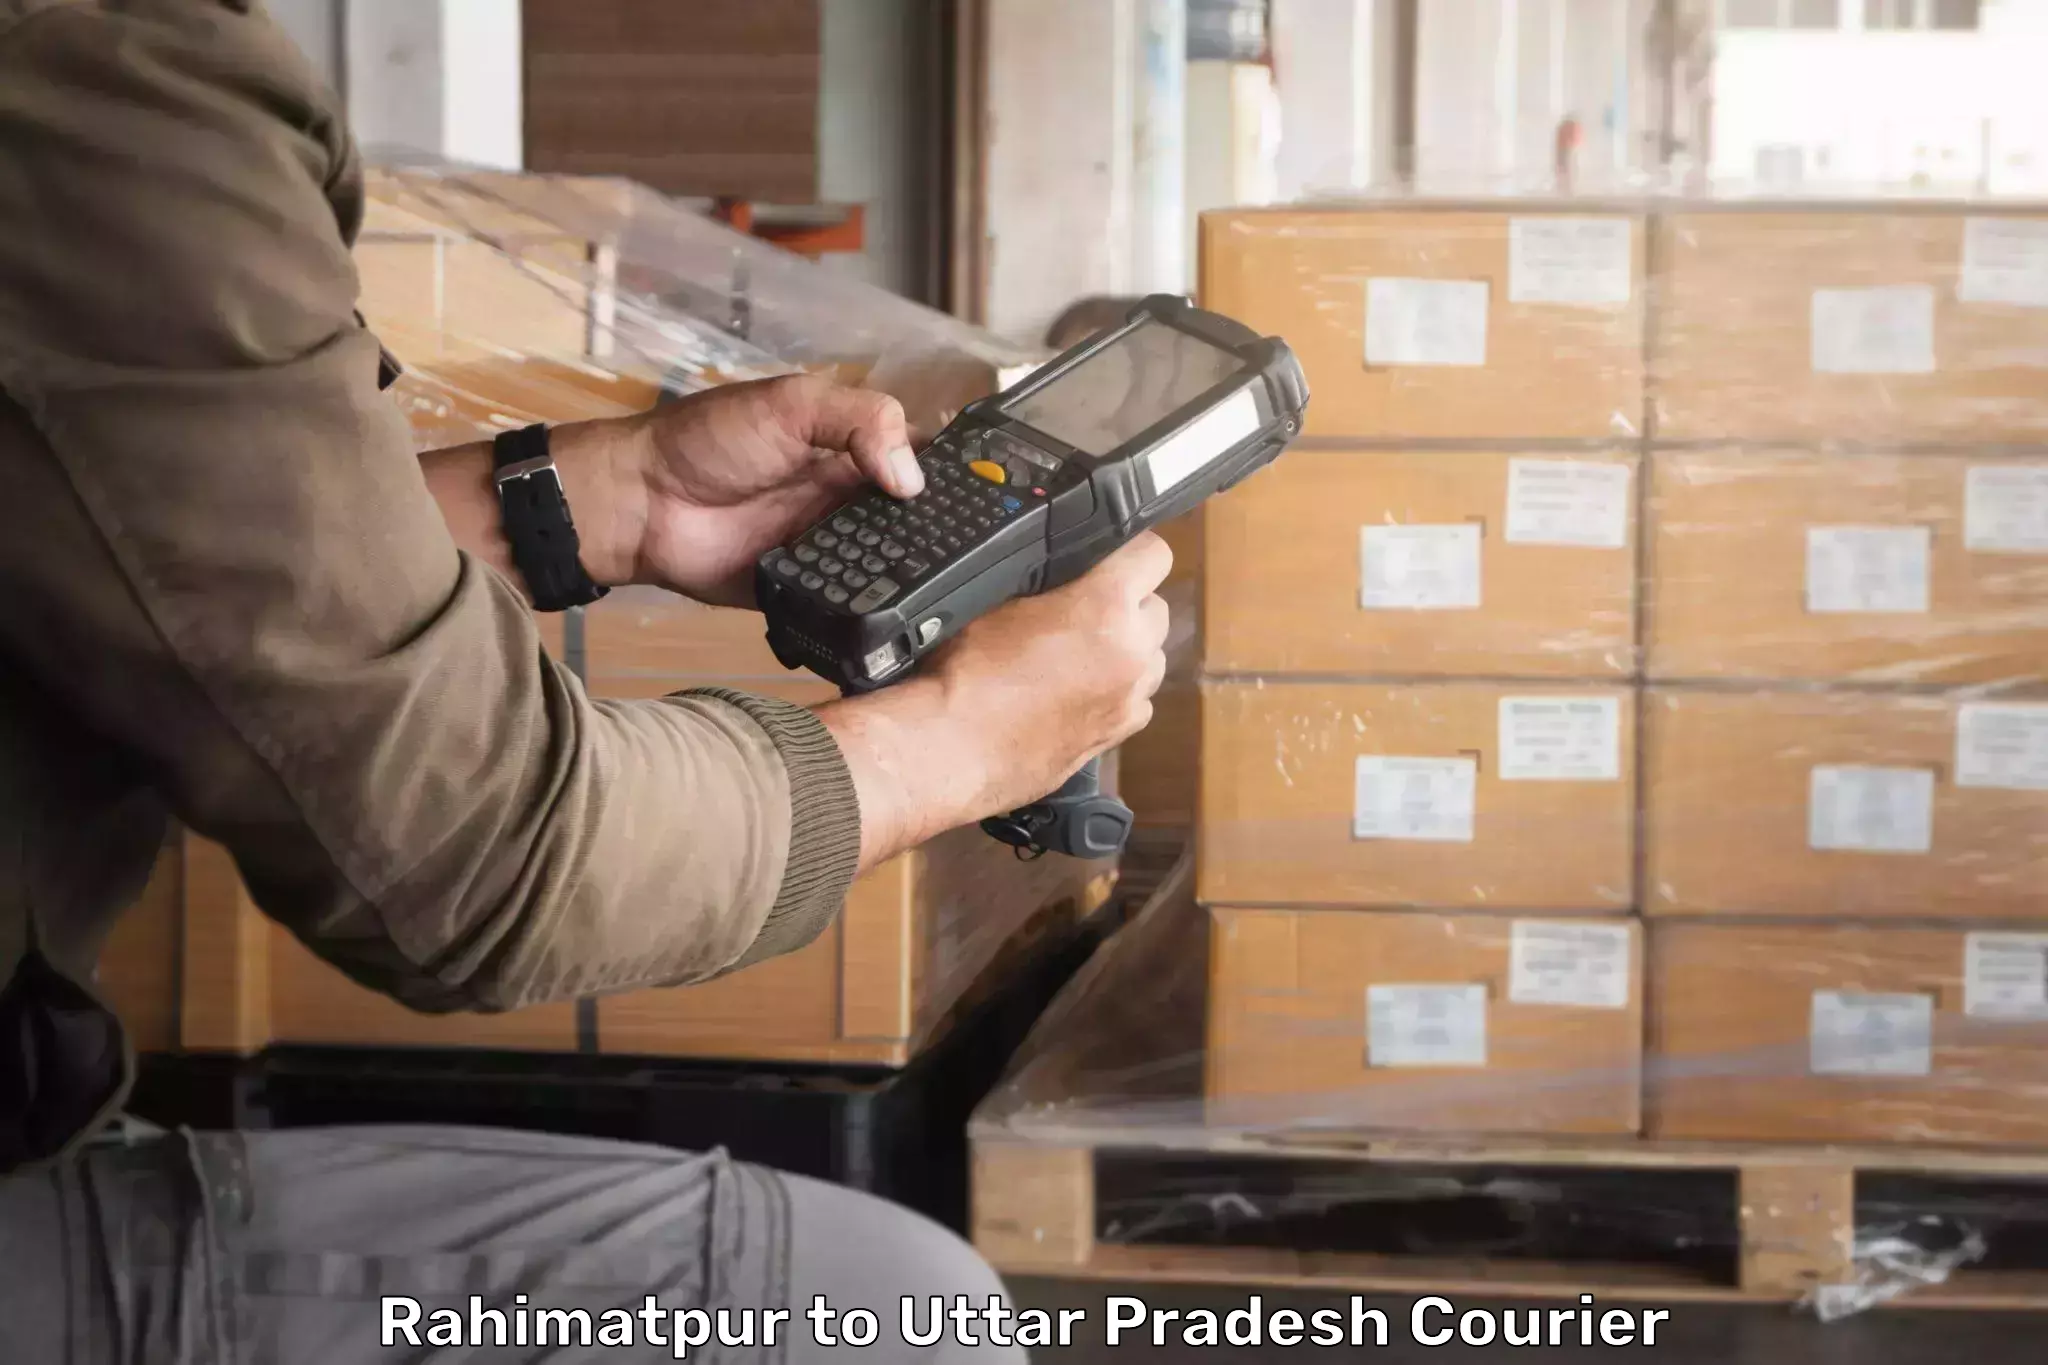 High-priority parcel service Rahimatpur to Anupshahar